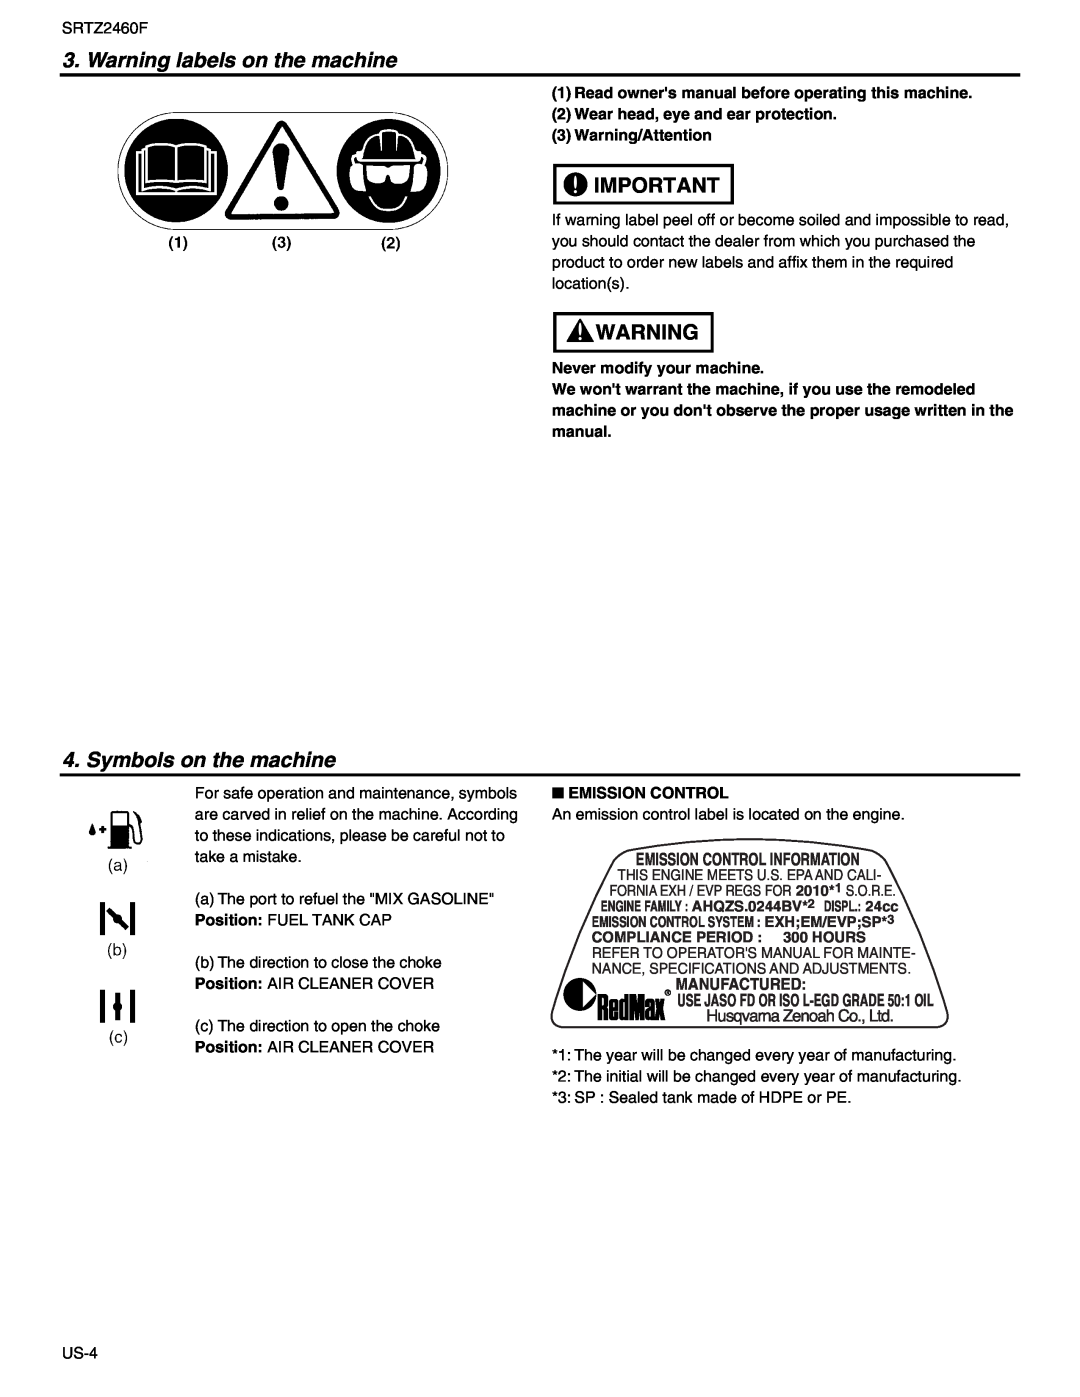 RedMax SRTZ2460F manual Warning labels on the machine, Symbols on the machine, Emission Control Information 